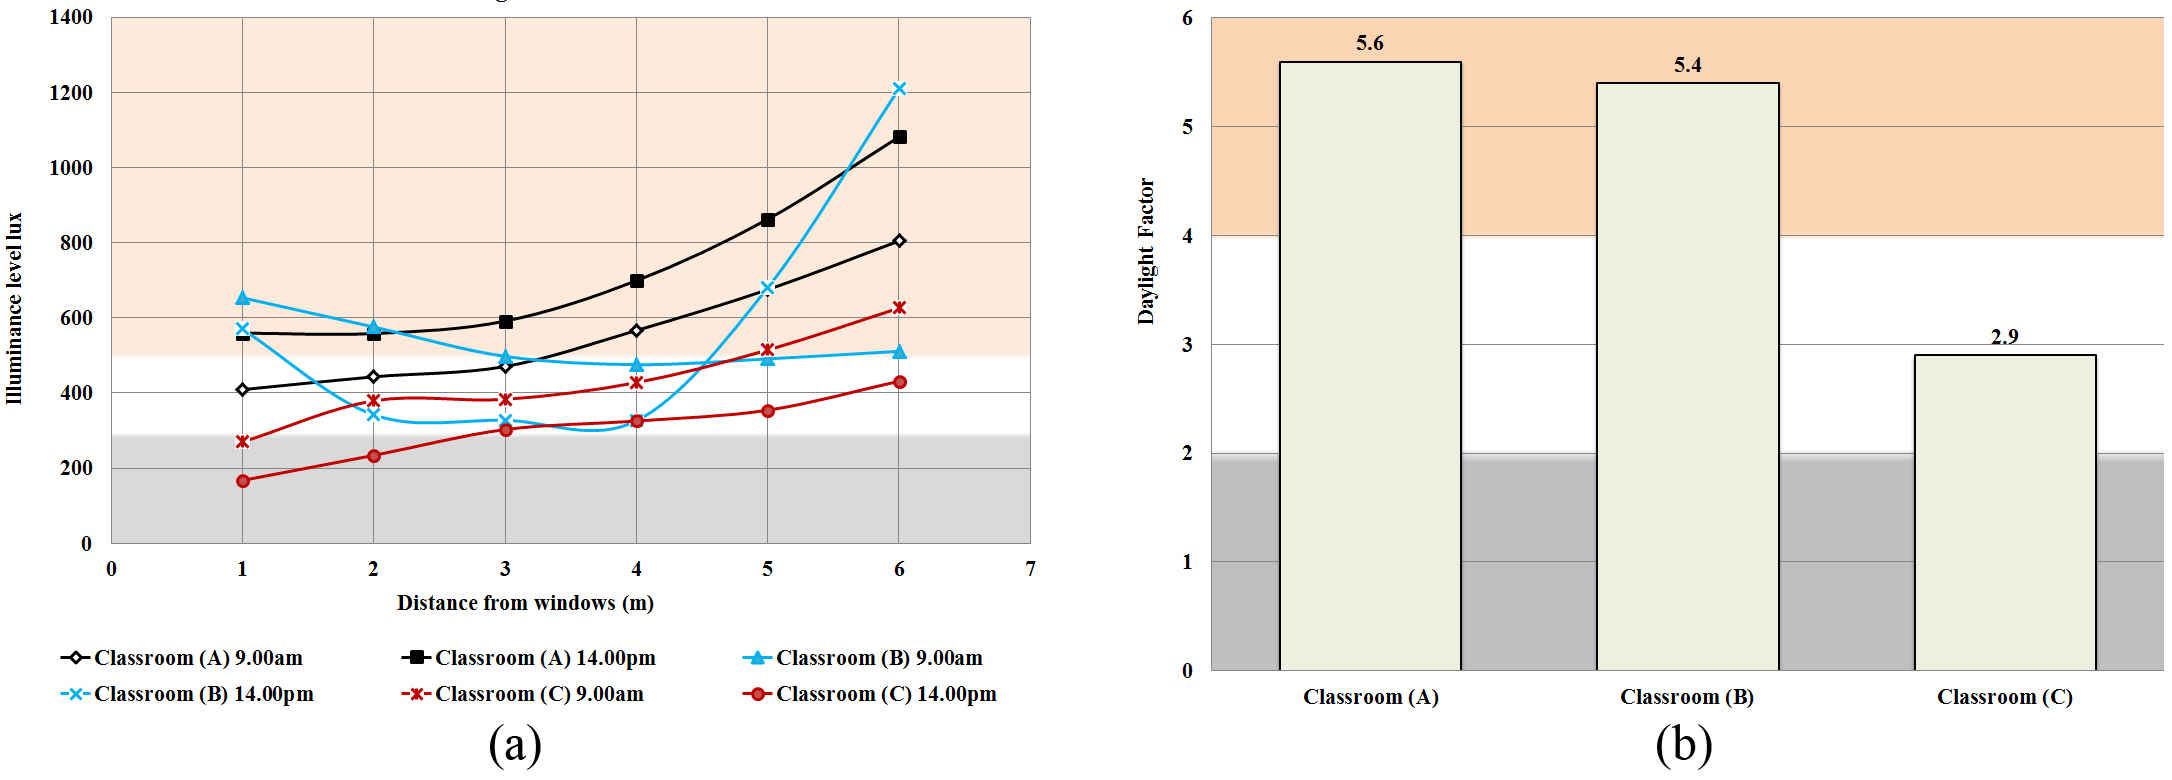 Summary of distribution of (a) average daylight illuminance and (b) average daylight factor on the tested classrooms at winter season.

